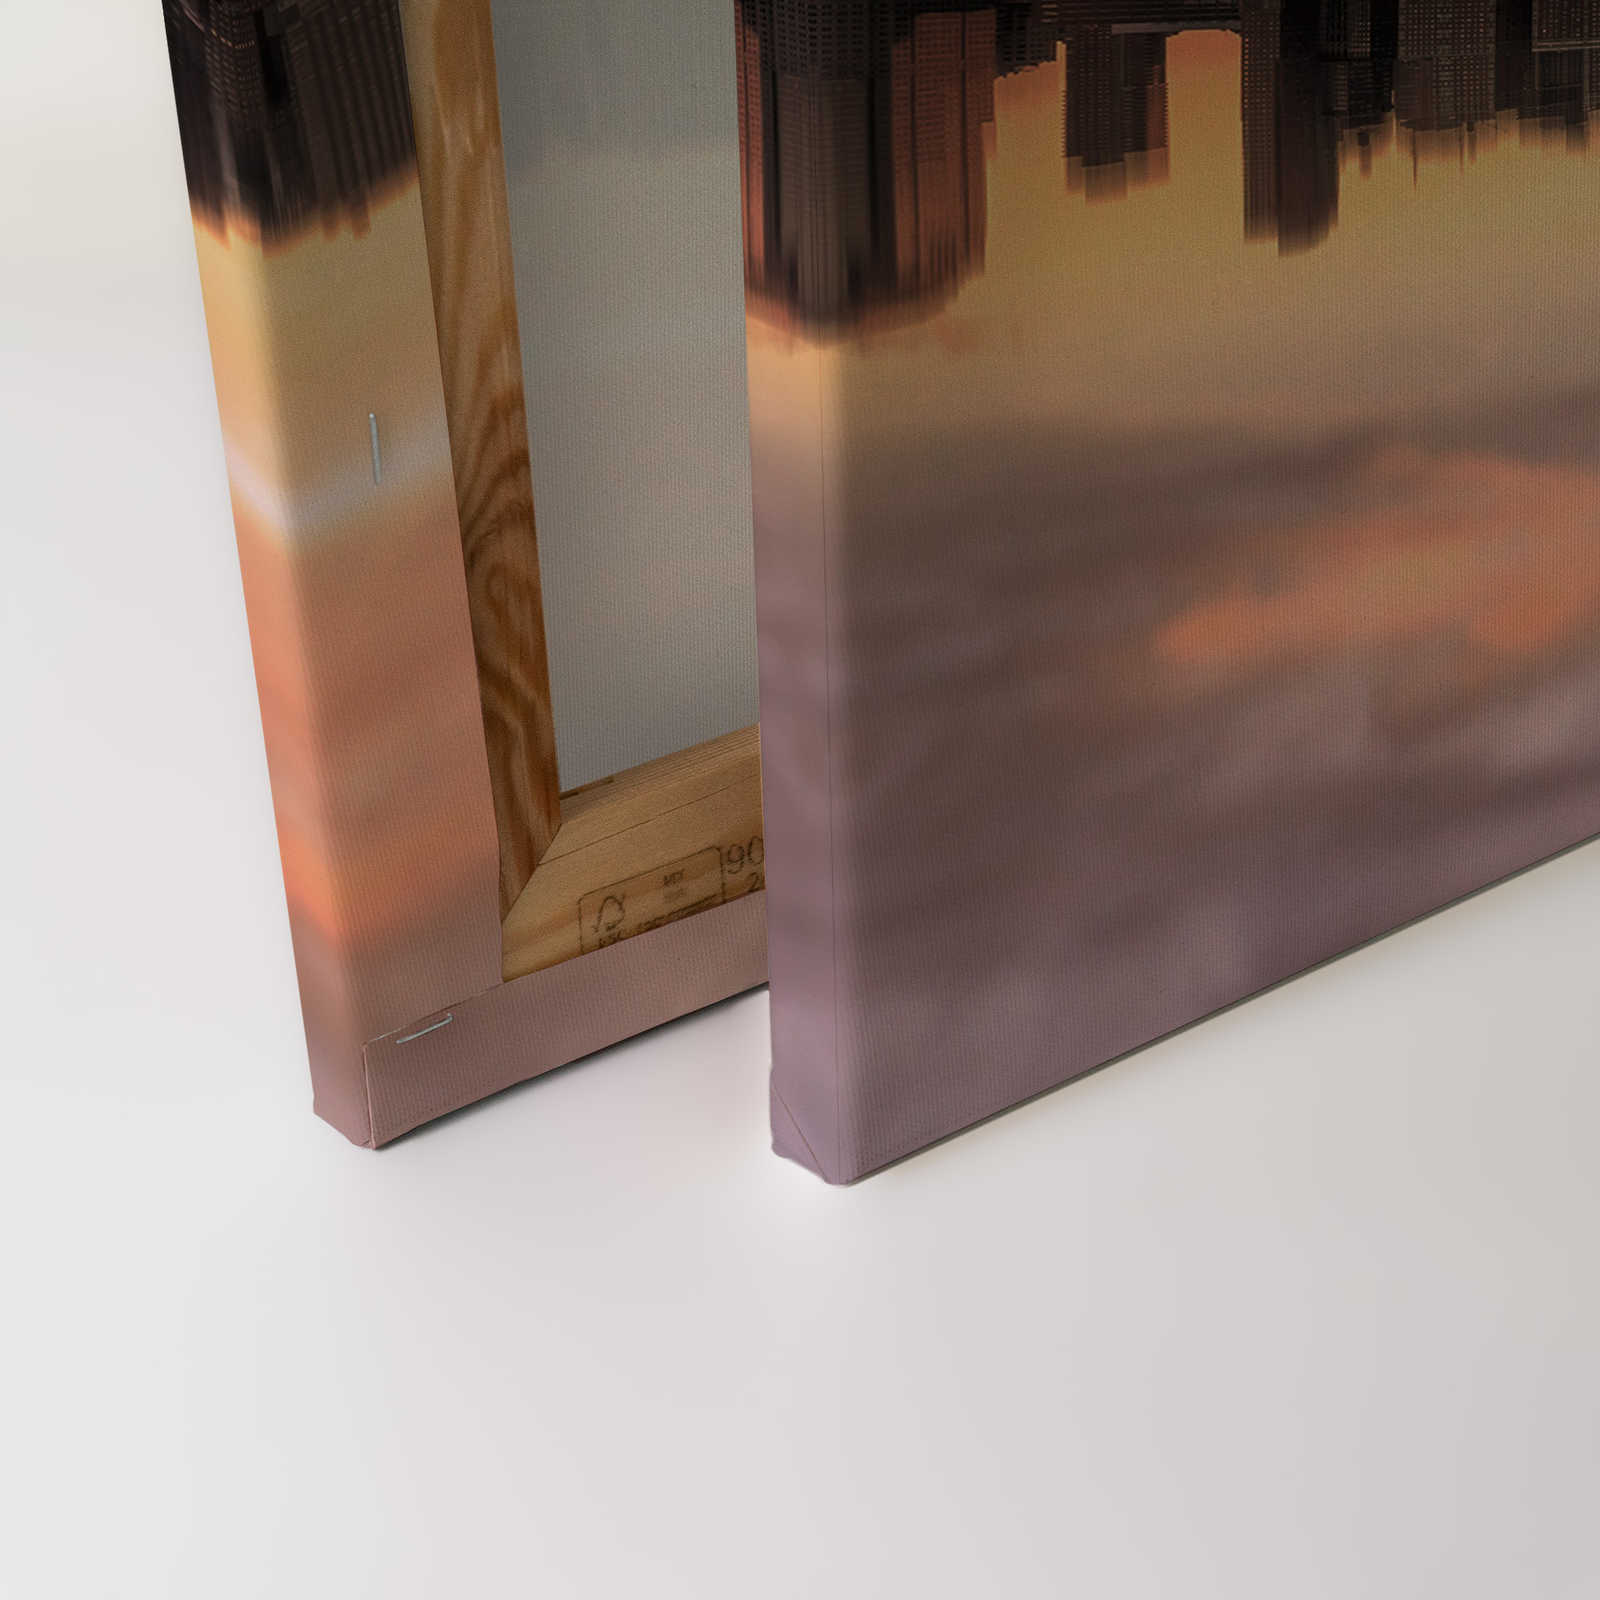             Canvas New York Skyline in de Avond - 0.90 m x 0.60 m
        